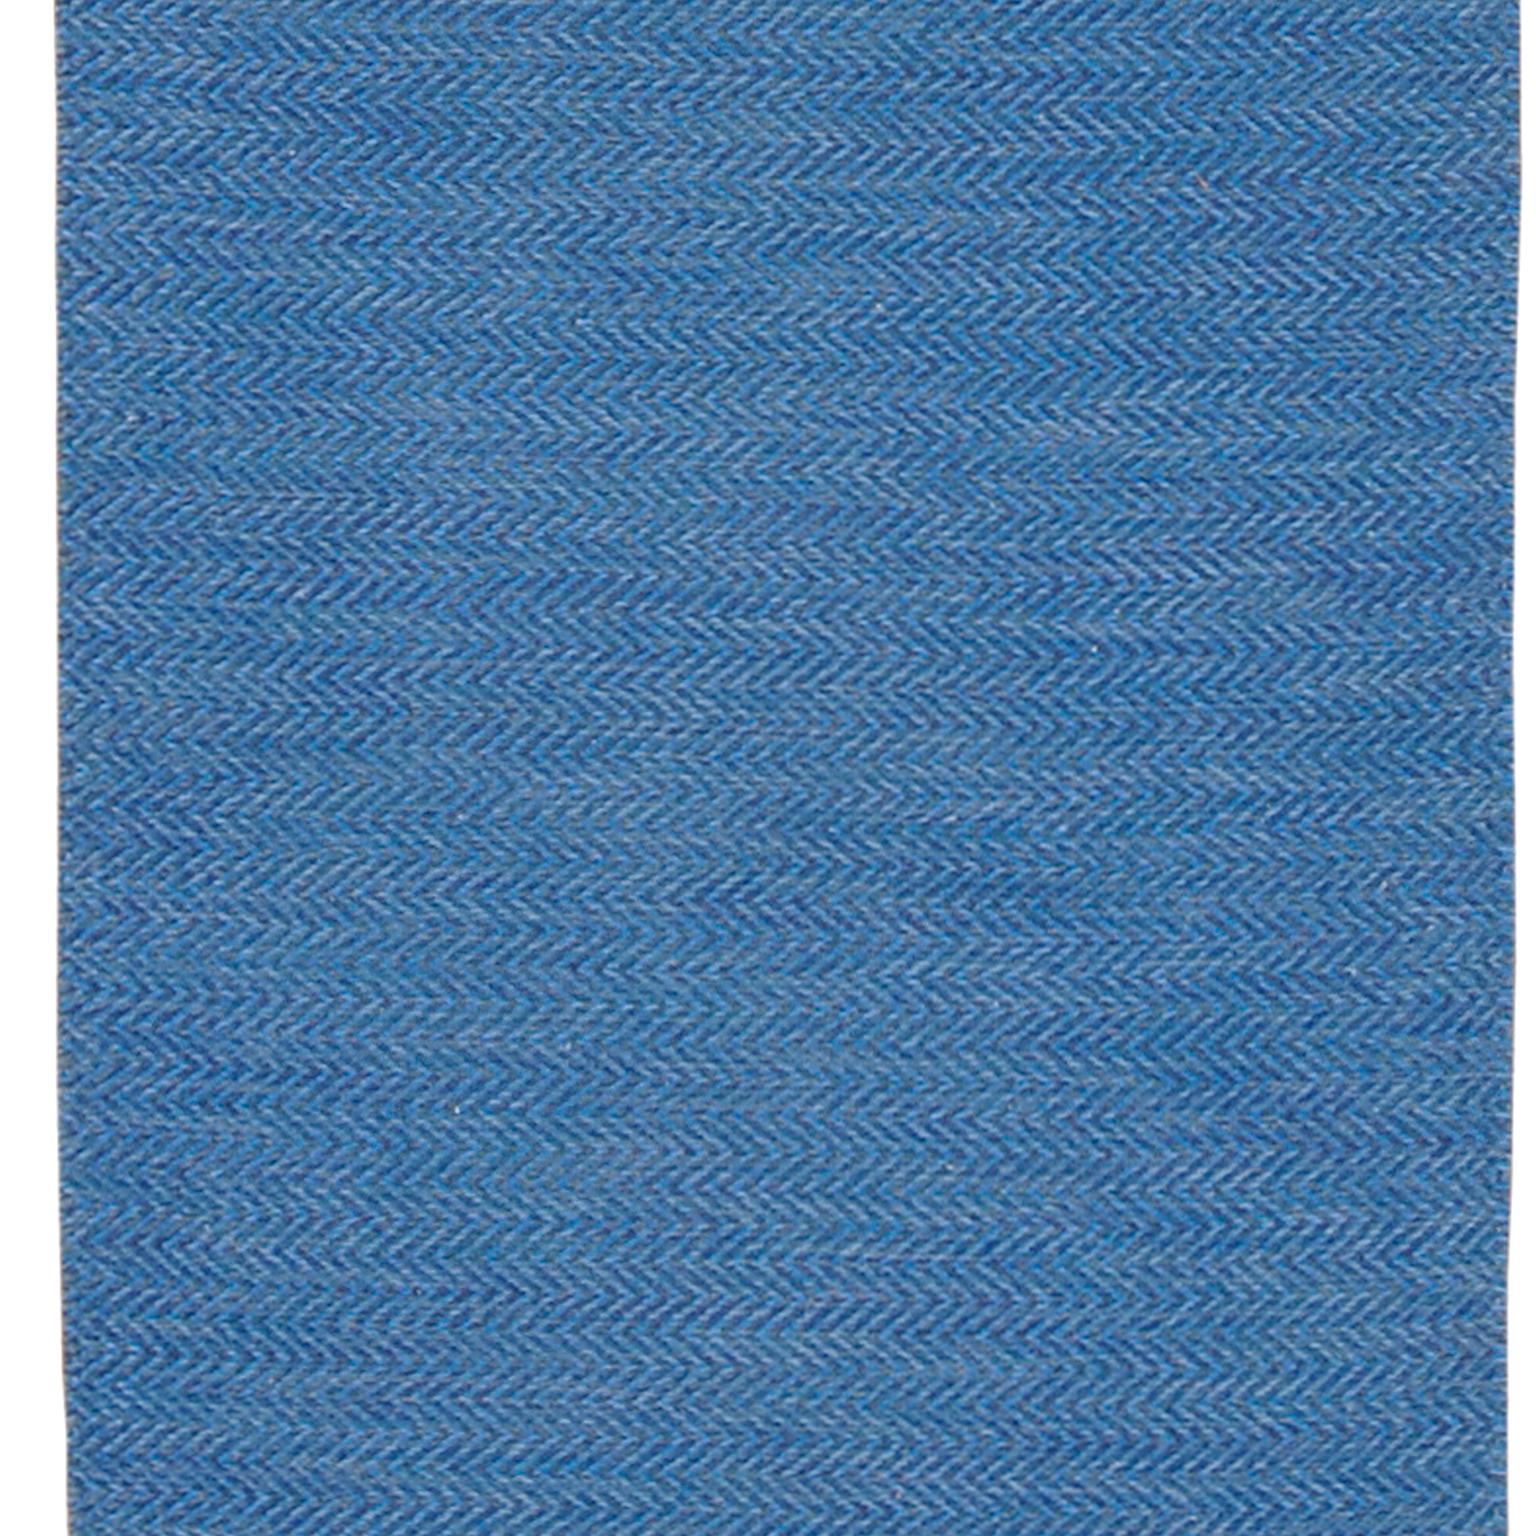 swedish flat weave rug